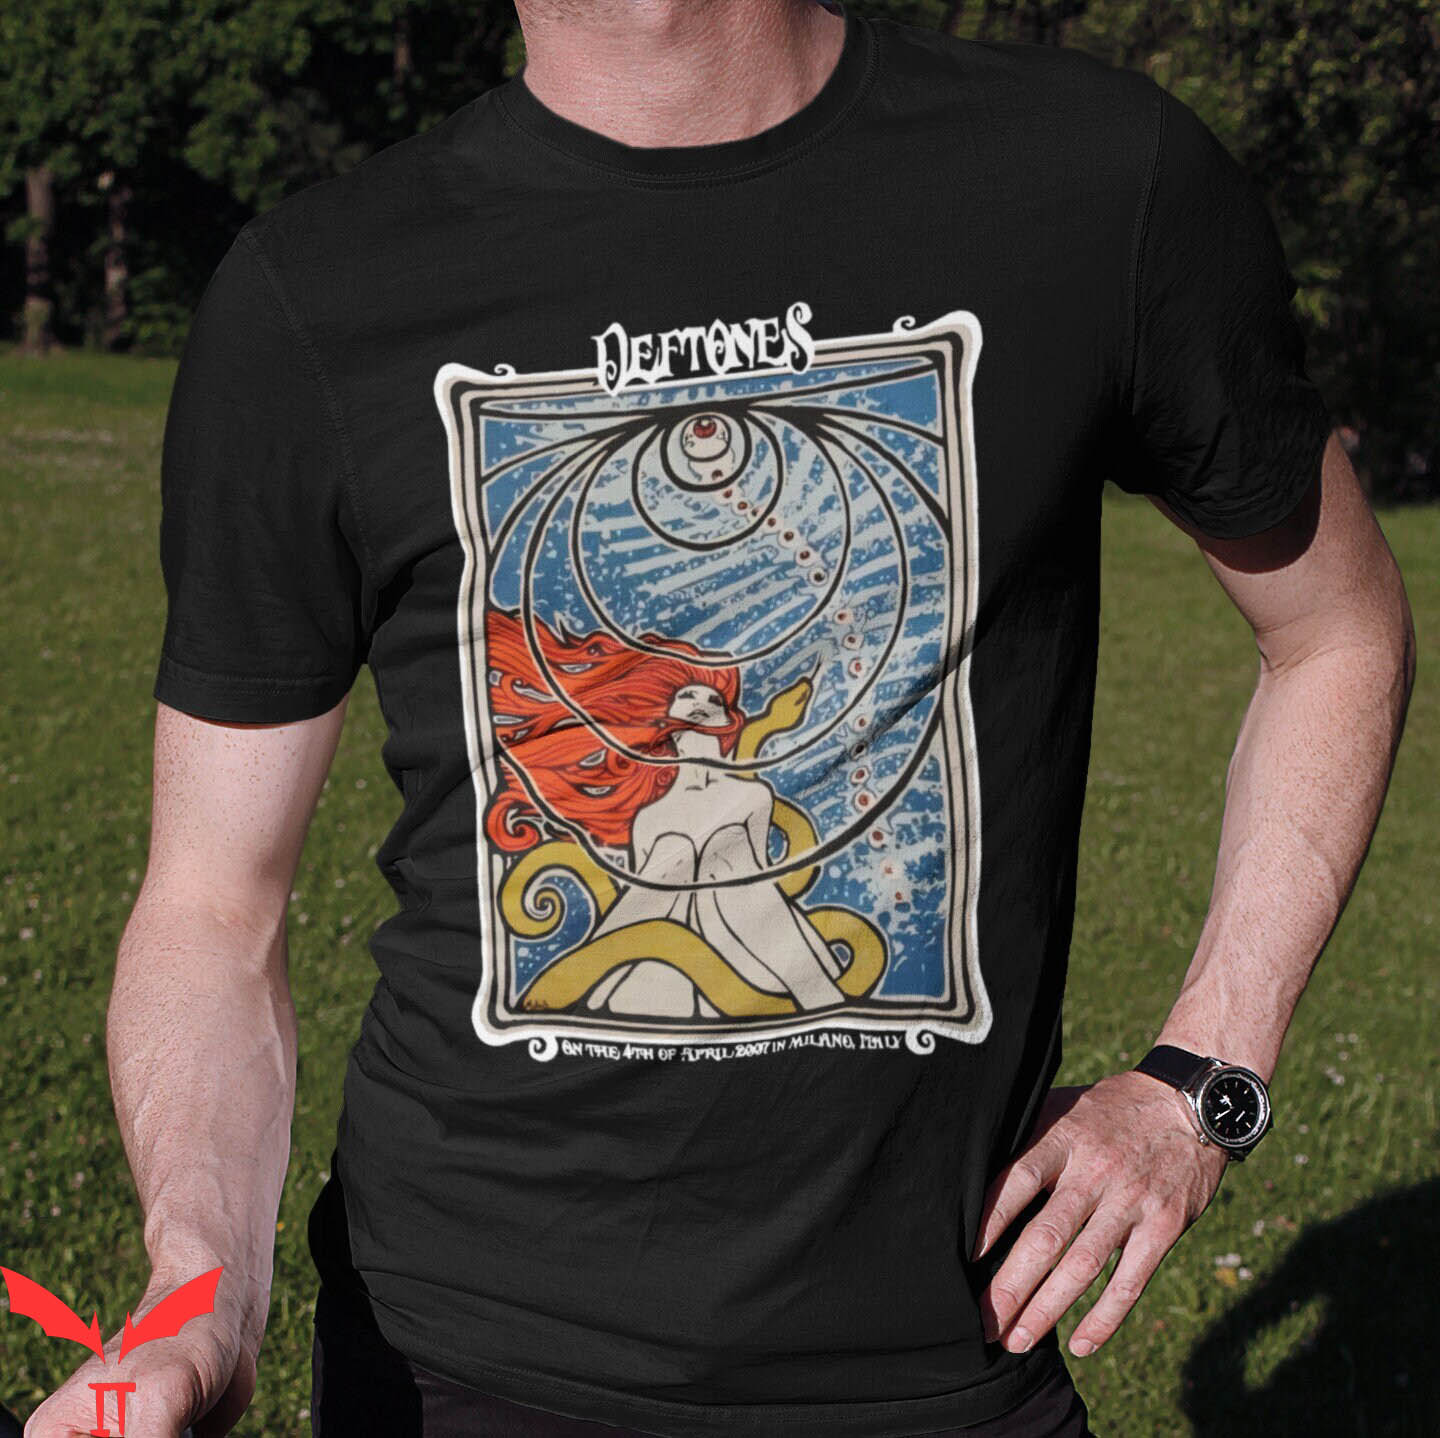 Vintage Deftones T-Shirt Metal Music Rock Style Tee Shirt